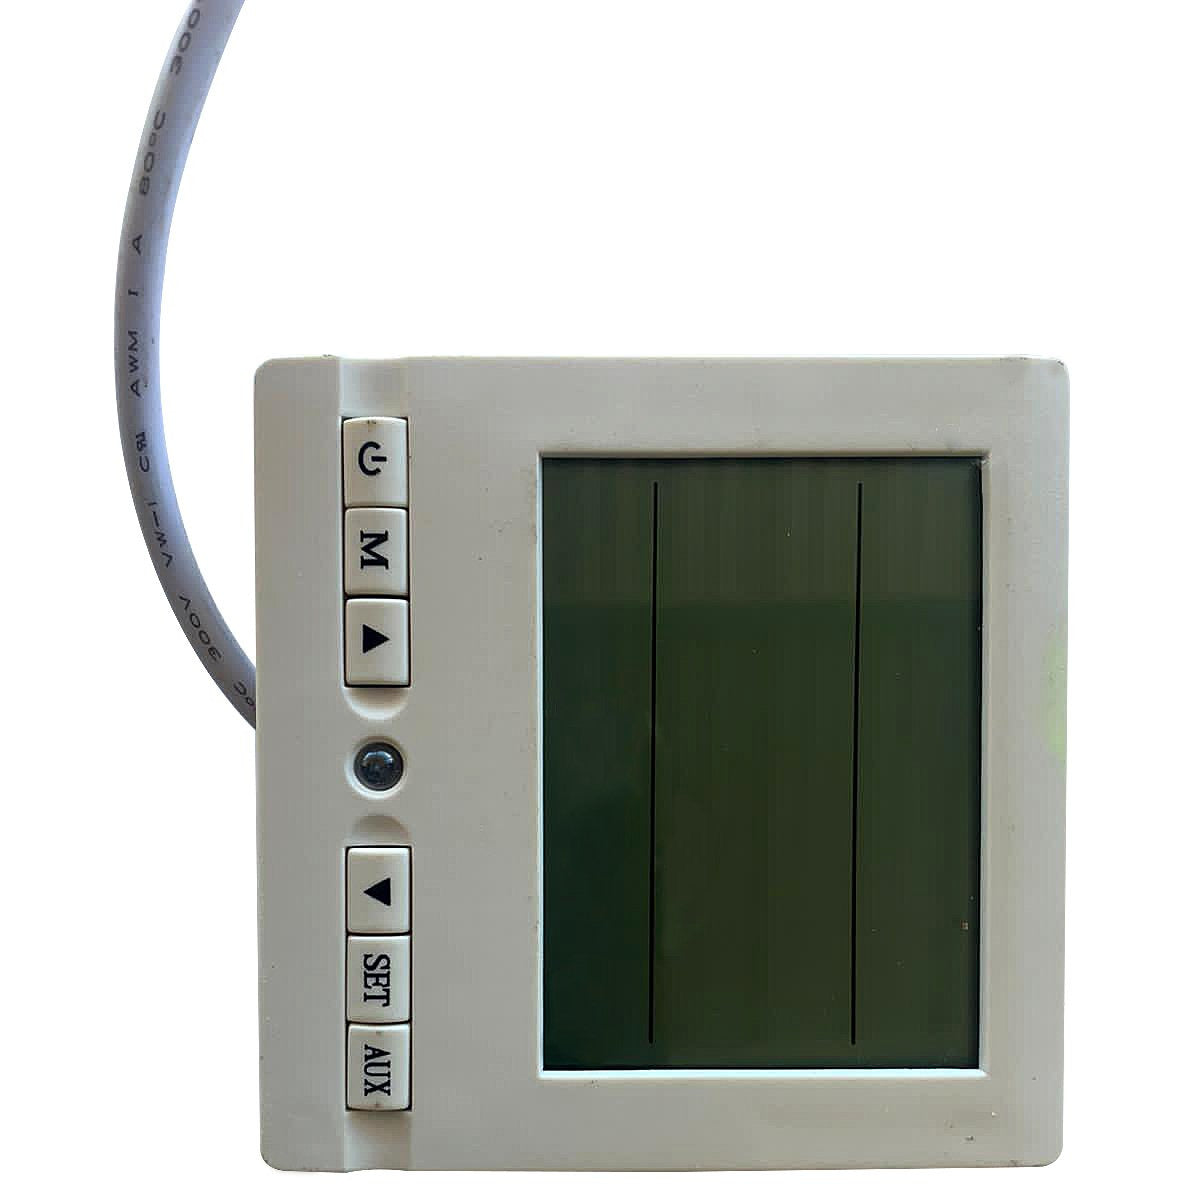 Heater digital controller, FH 270